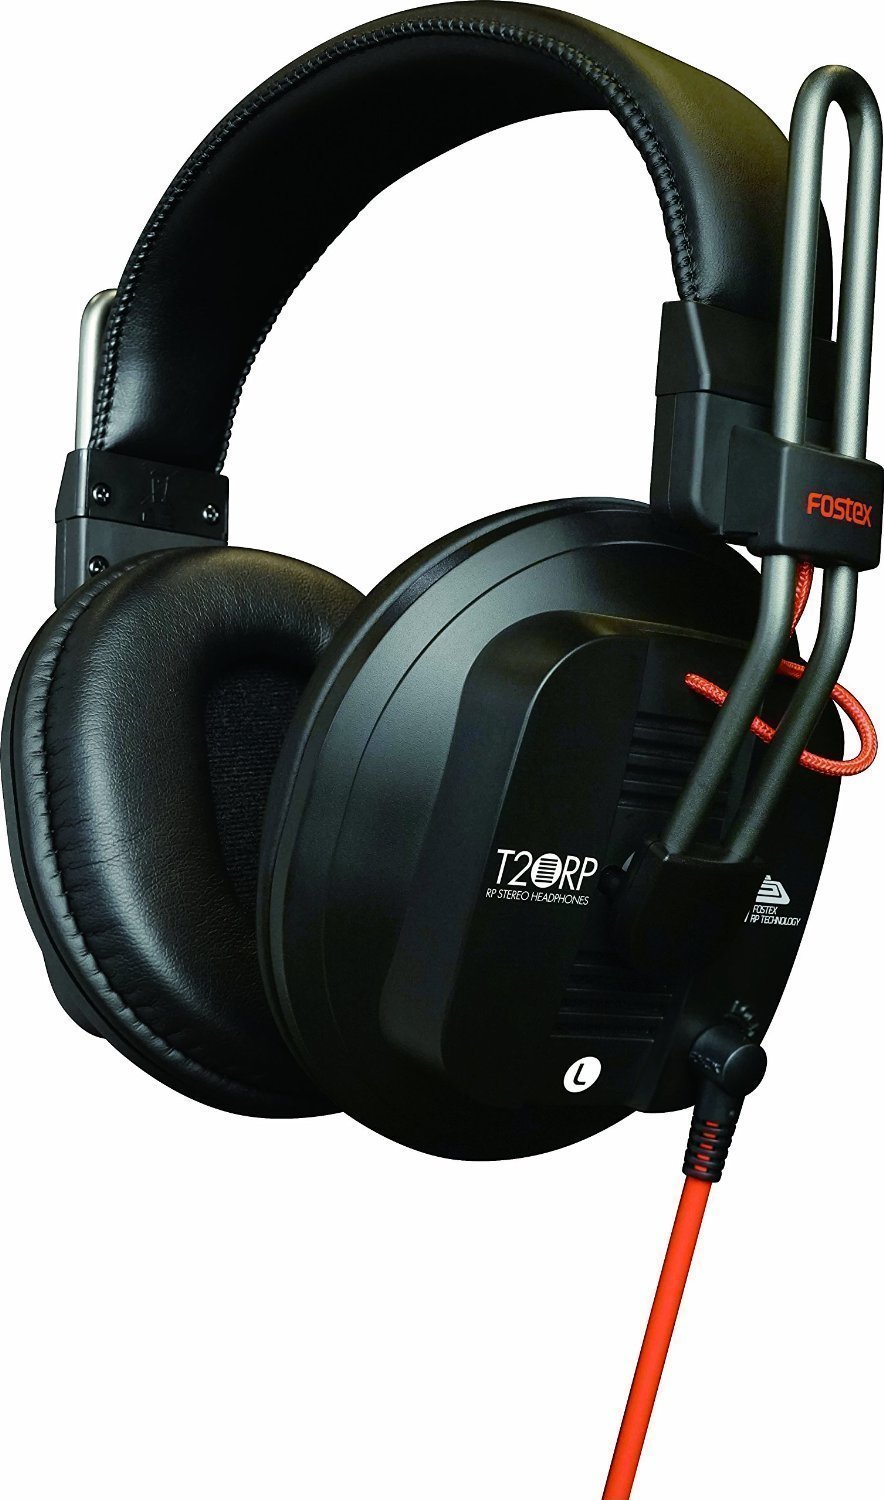 Studio Headphones Fostex T20RP MK3